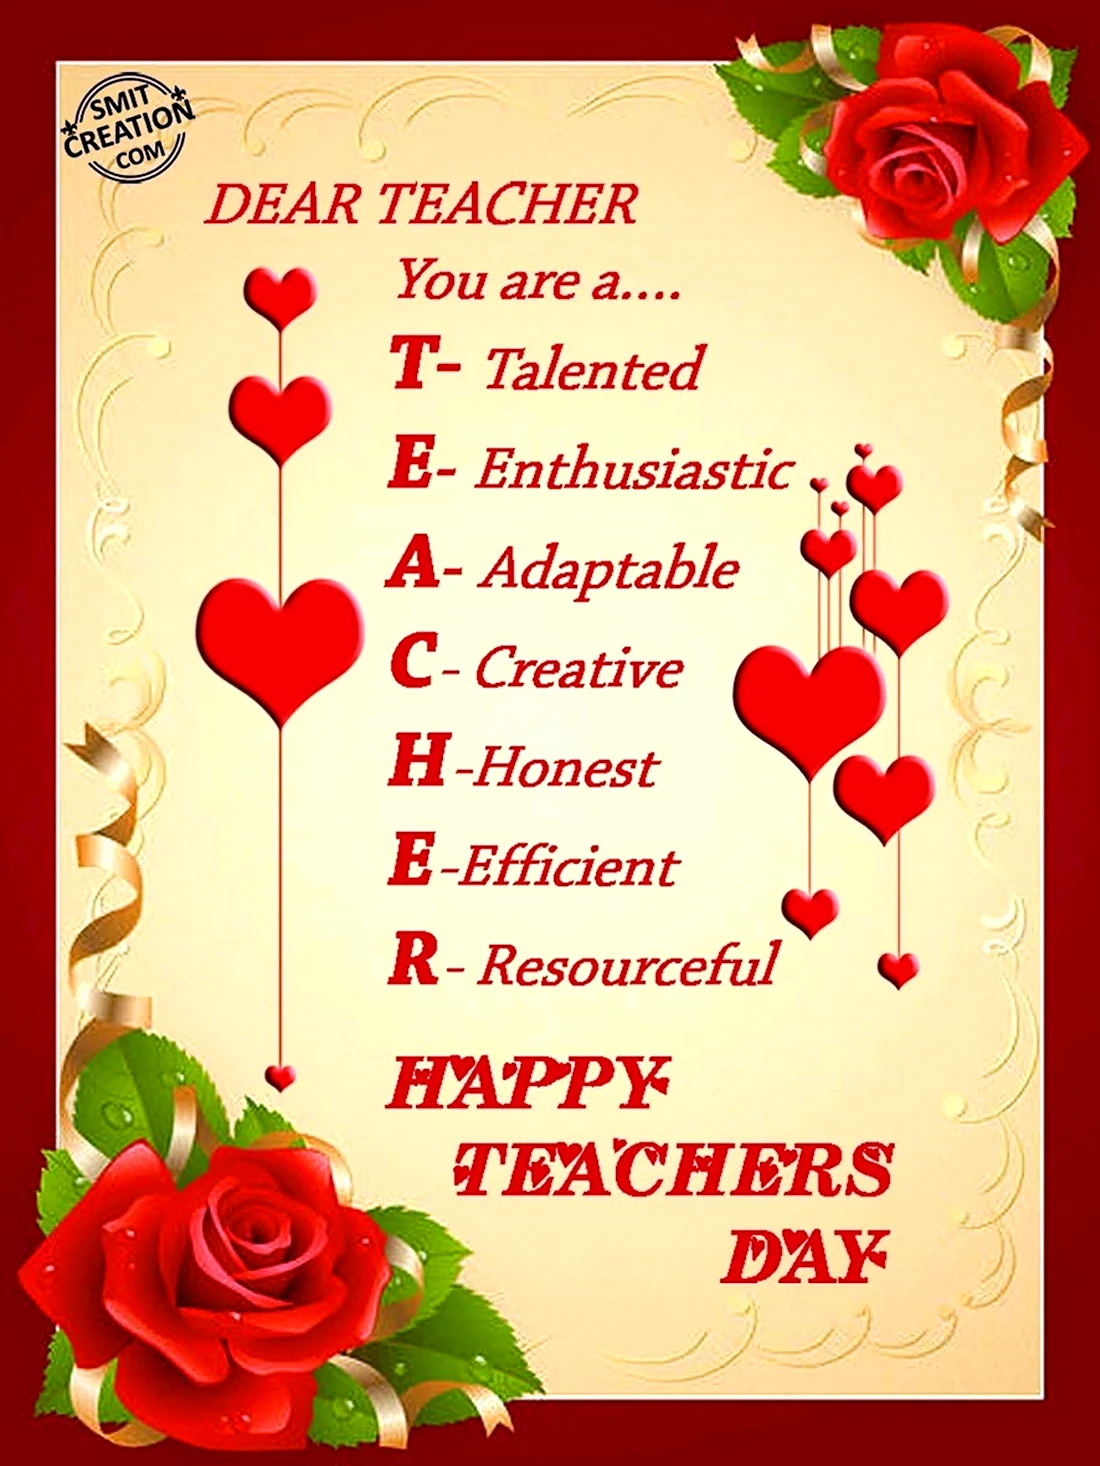 Happy teachers Day открытки открытка